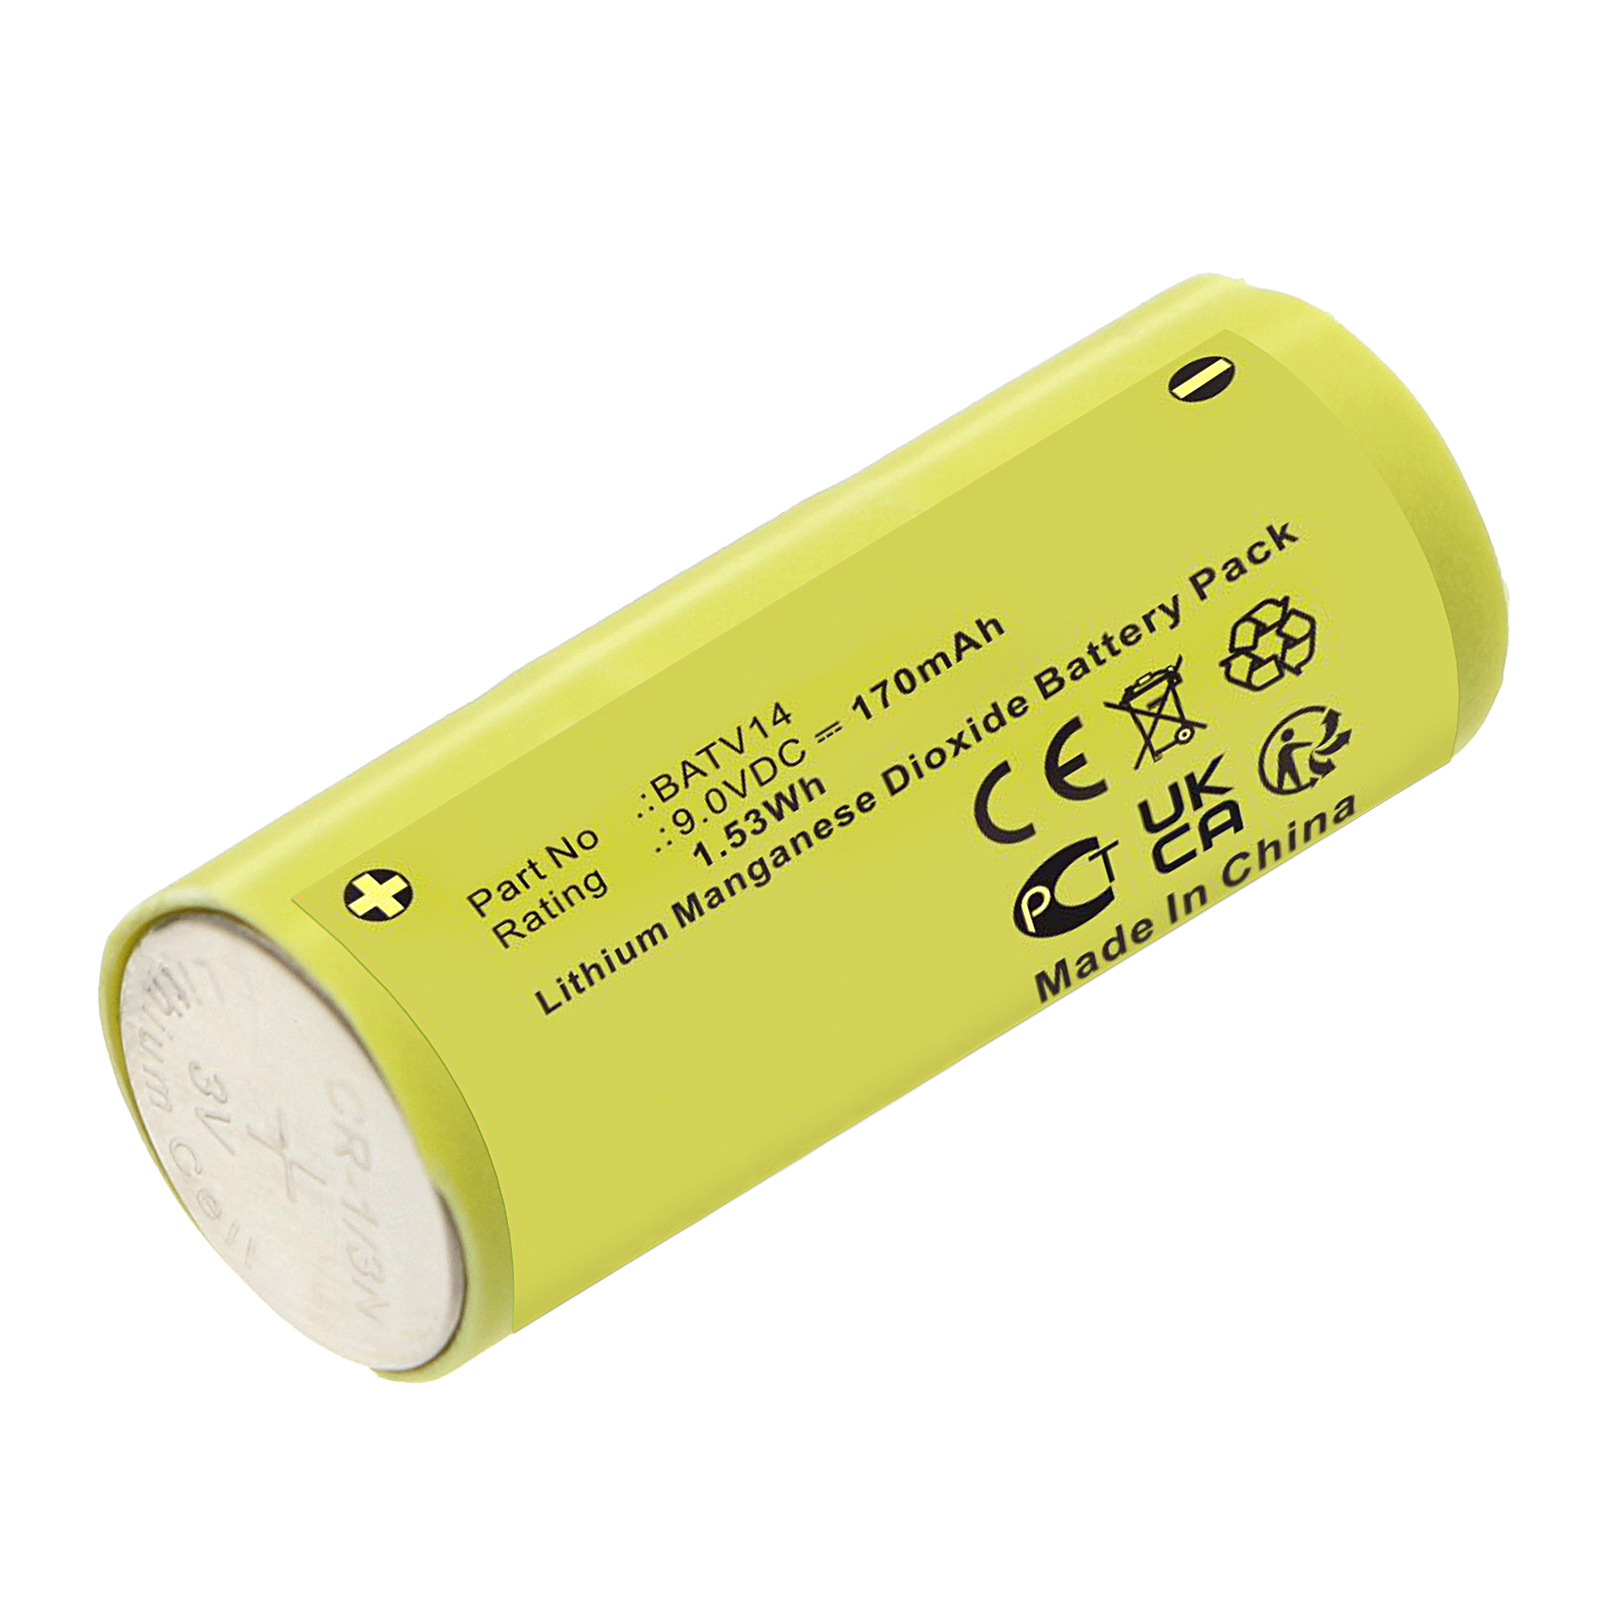 Synergy Digital Alarm System Battery, Compatible with DAITEM BATV14 Alarm System Battery (Li-MnO2, 9V, 170mAh)